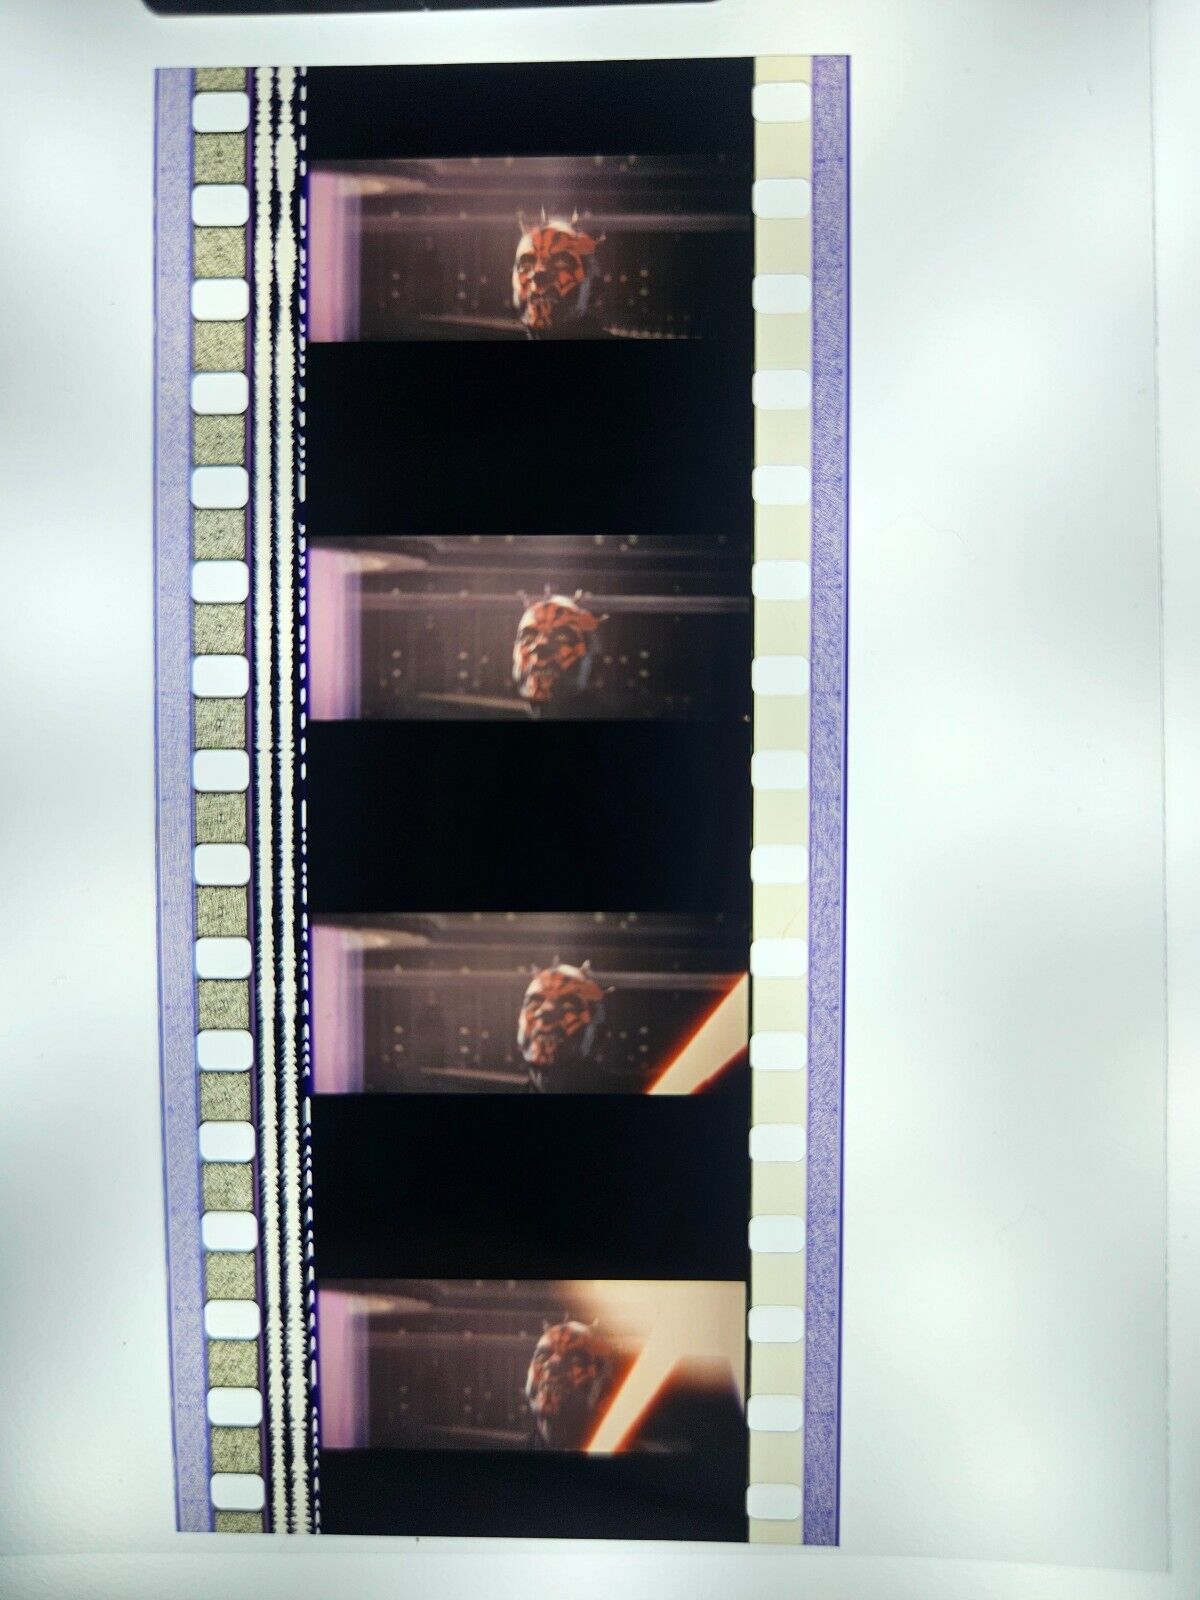 Darth Maul Star Wars Episode 1 Phantom Menace 35mm Original Film Cells SW2100 Star Wars 35mm Film Cell - Hobby Gems